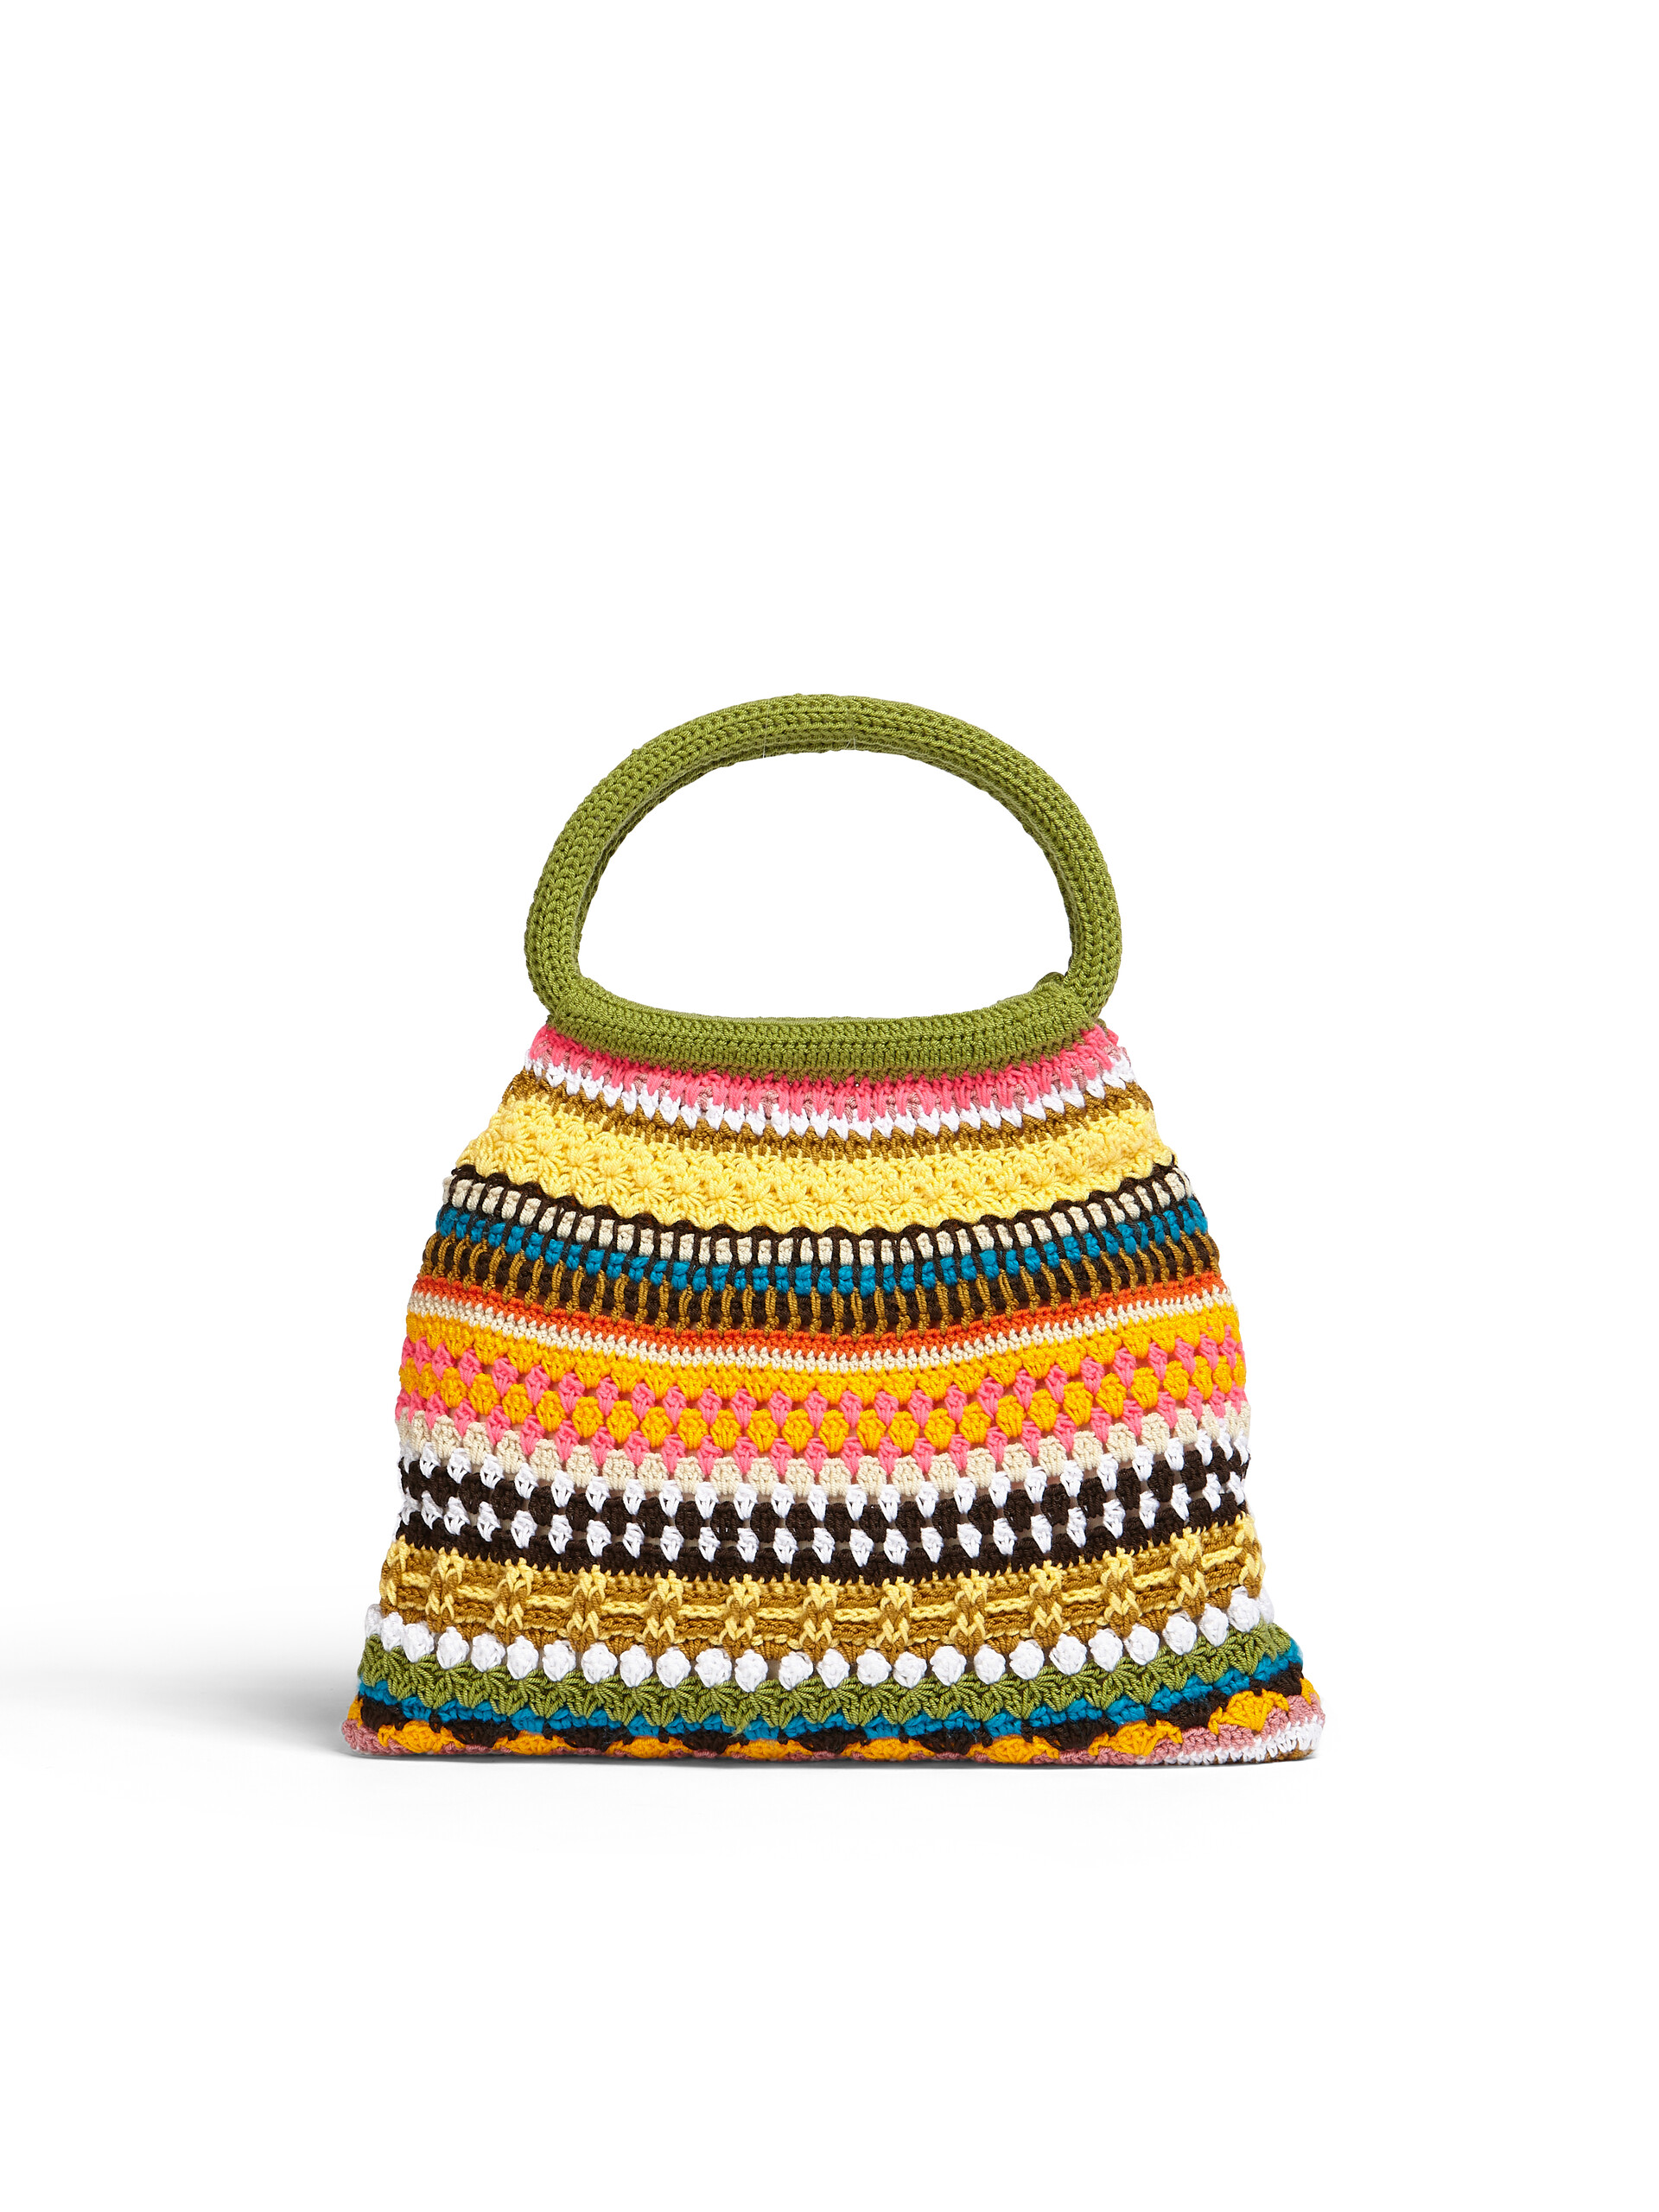 MARNI MARKET GRANNY bag in green crochet - Furniture - Image 3